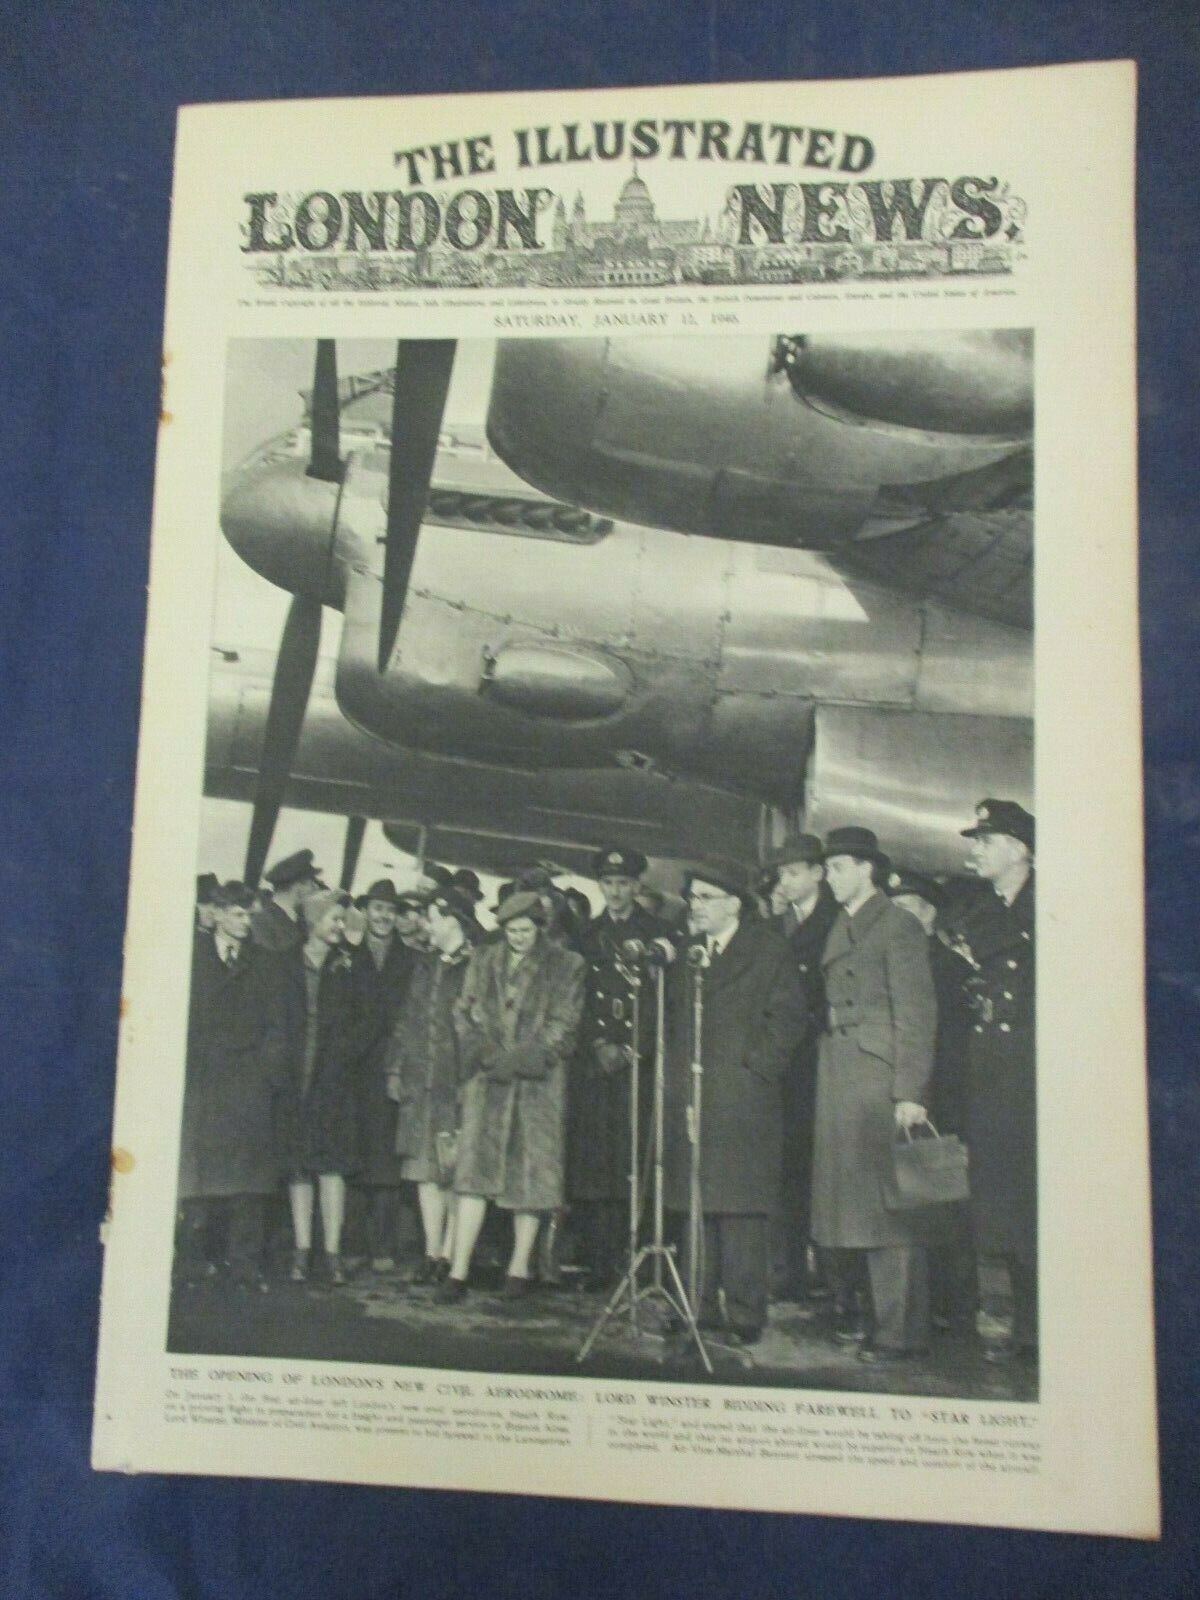  Vintage The Illustrated London News January 12, 1946 New Civil Aerodrome Opens